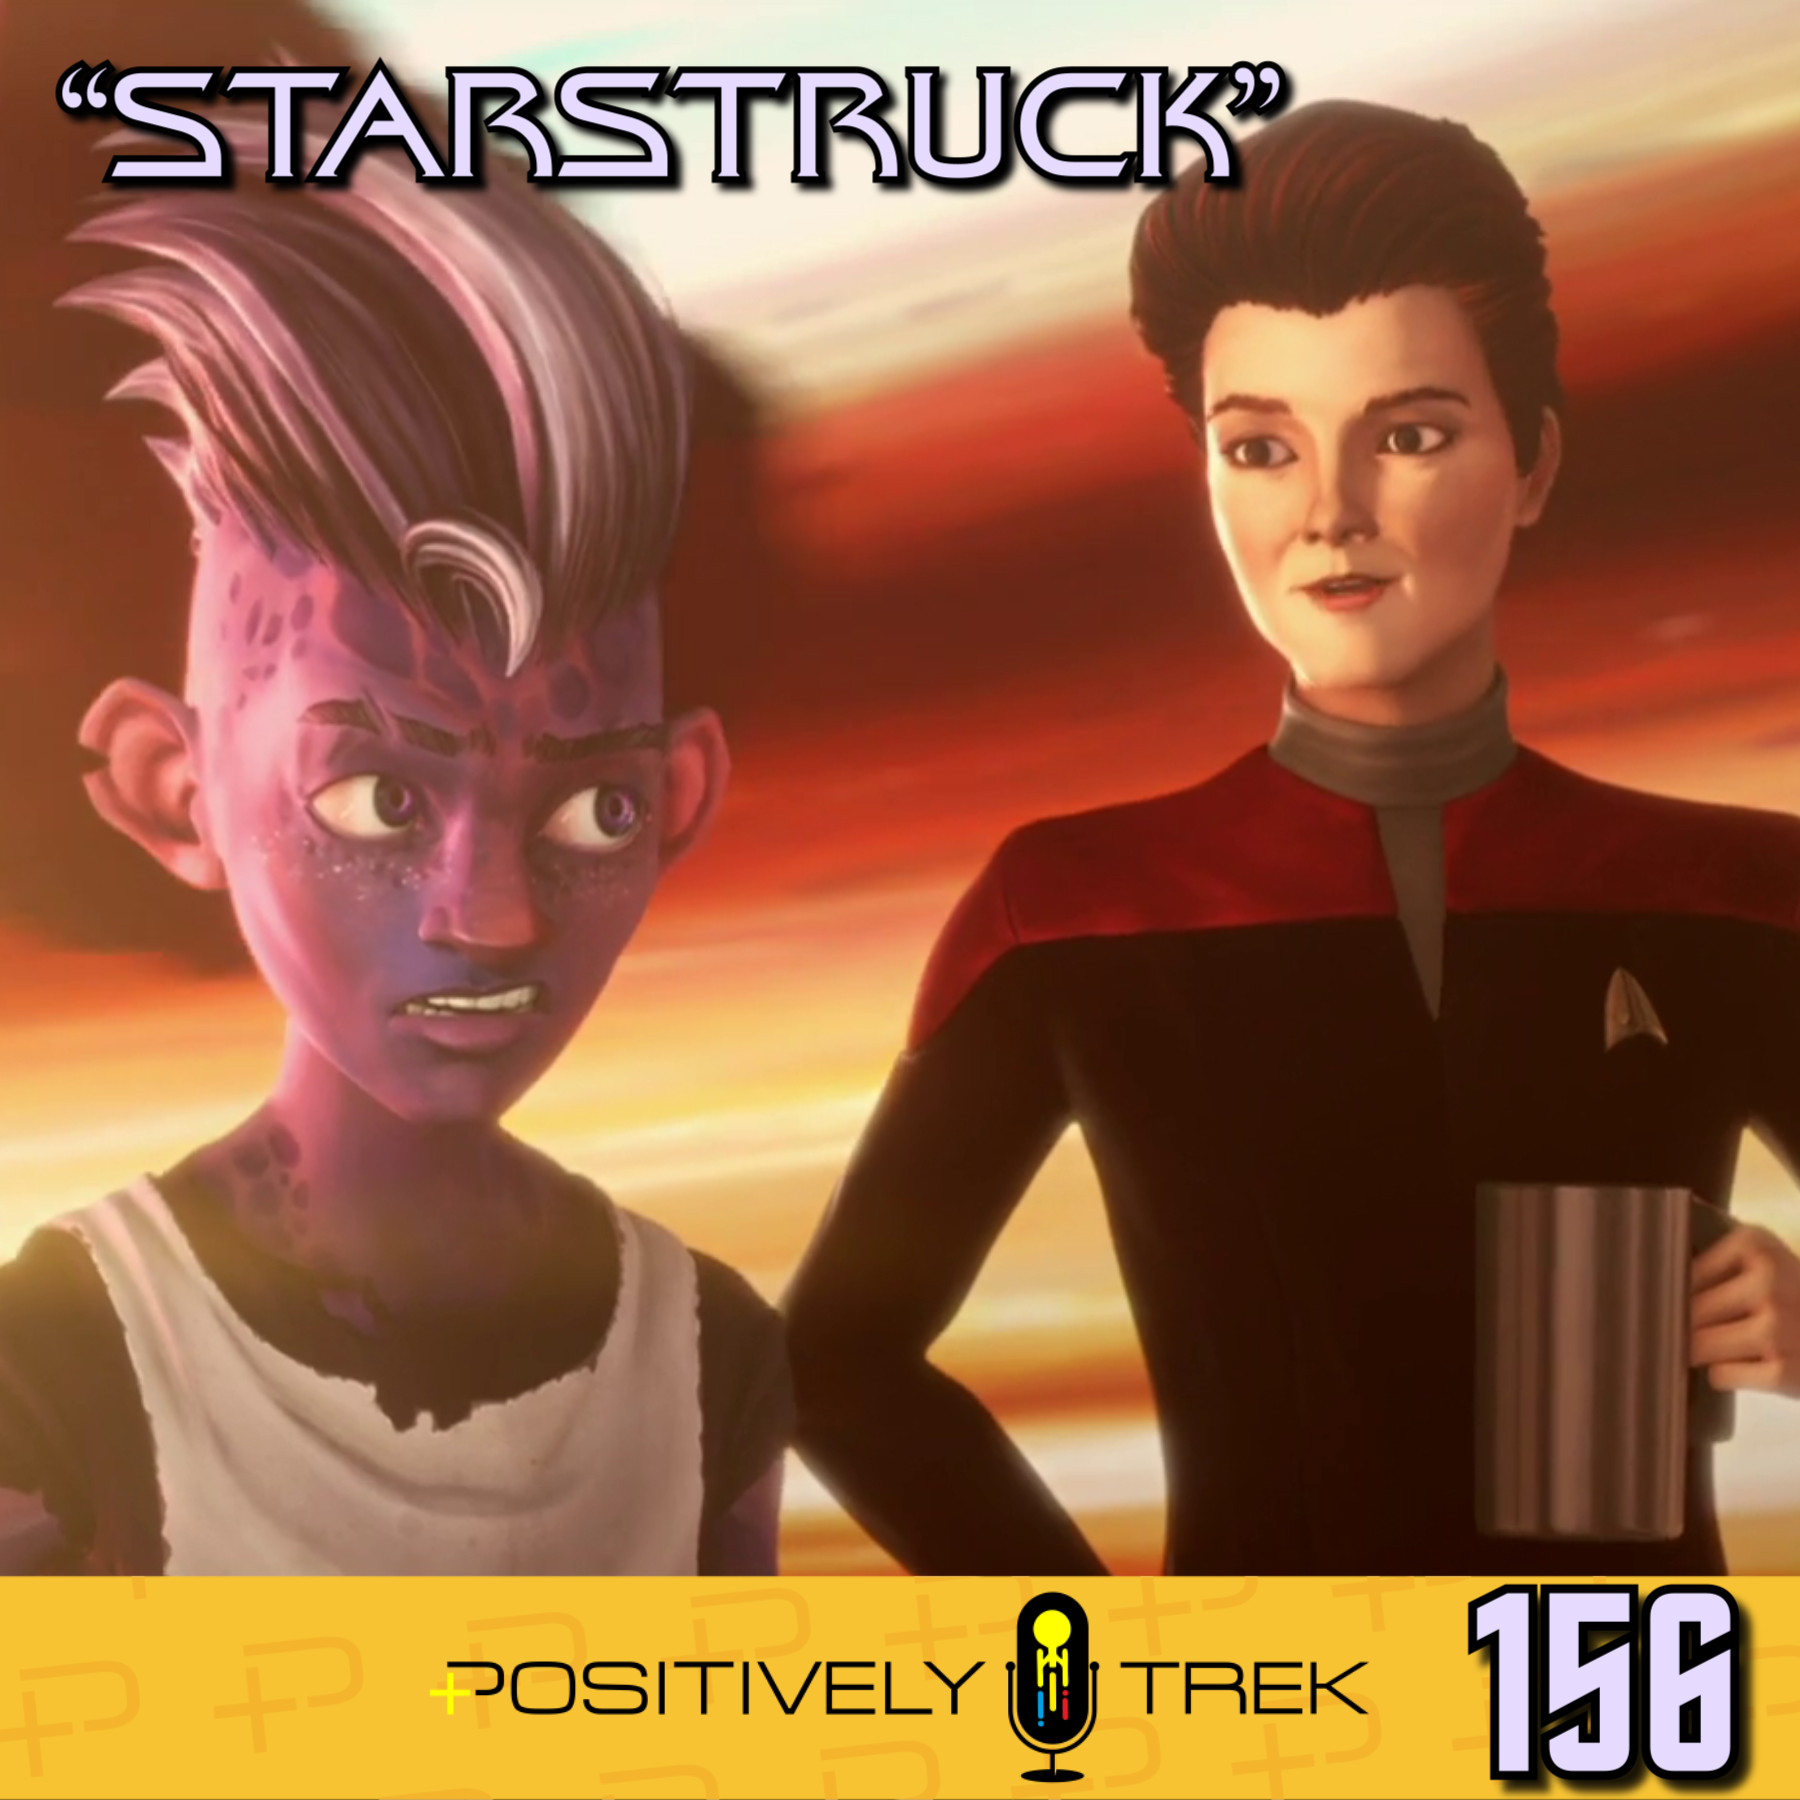 Prodigy Review: “Starstruck” (1.03)